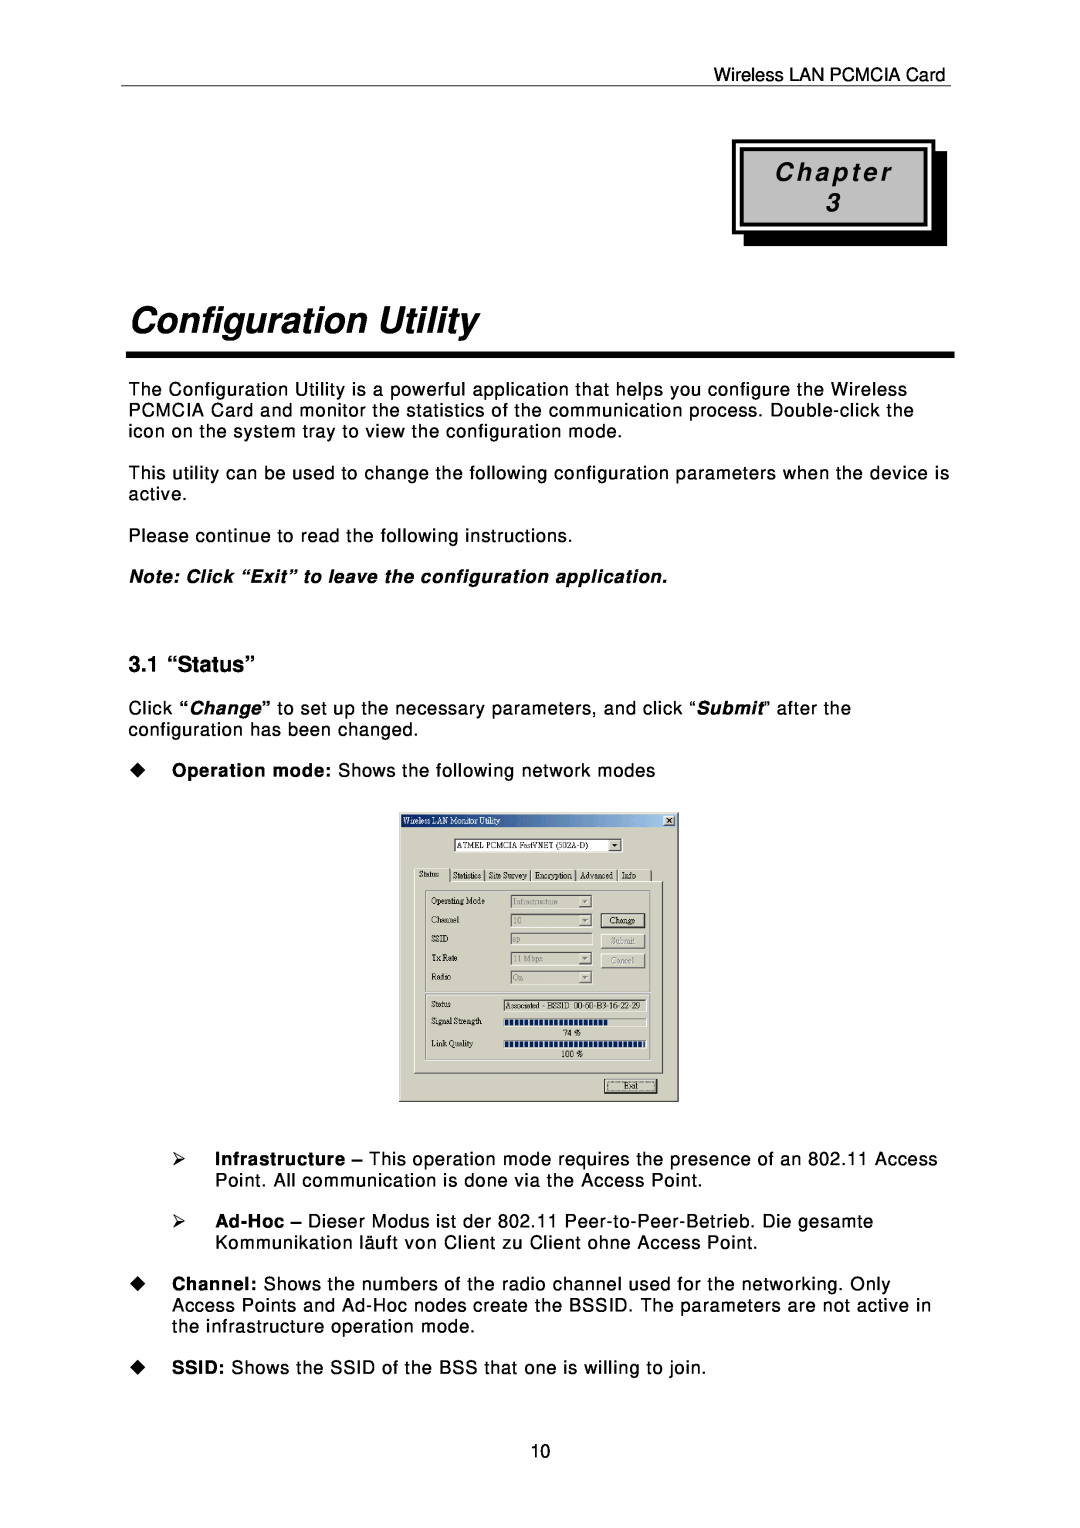 IBM PCMCIA Card user manual Configuration Utility, 3.1 “Status”, C h a p t e r 